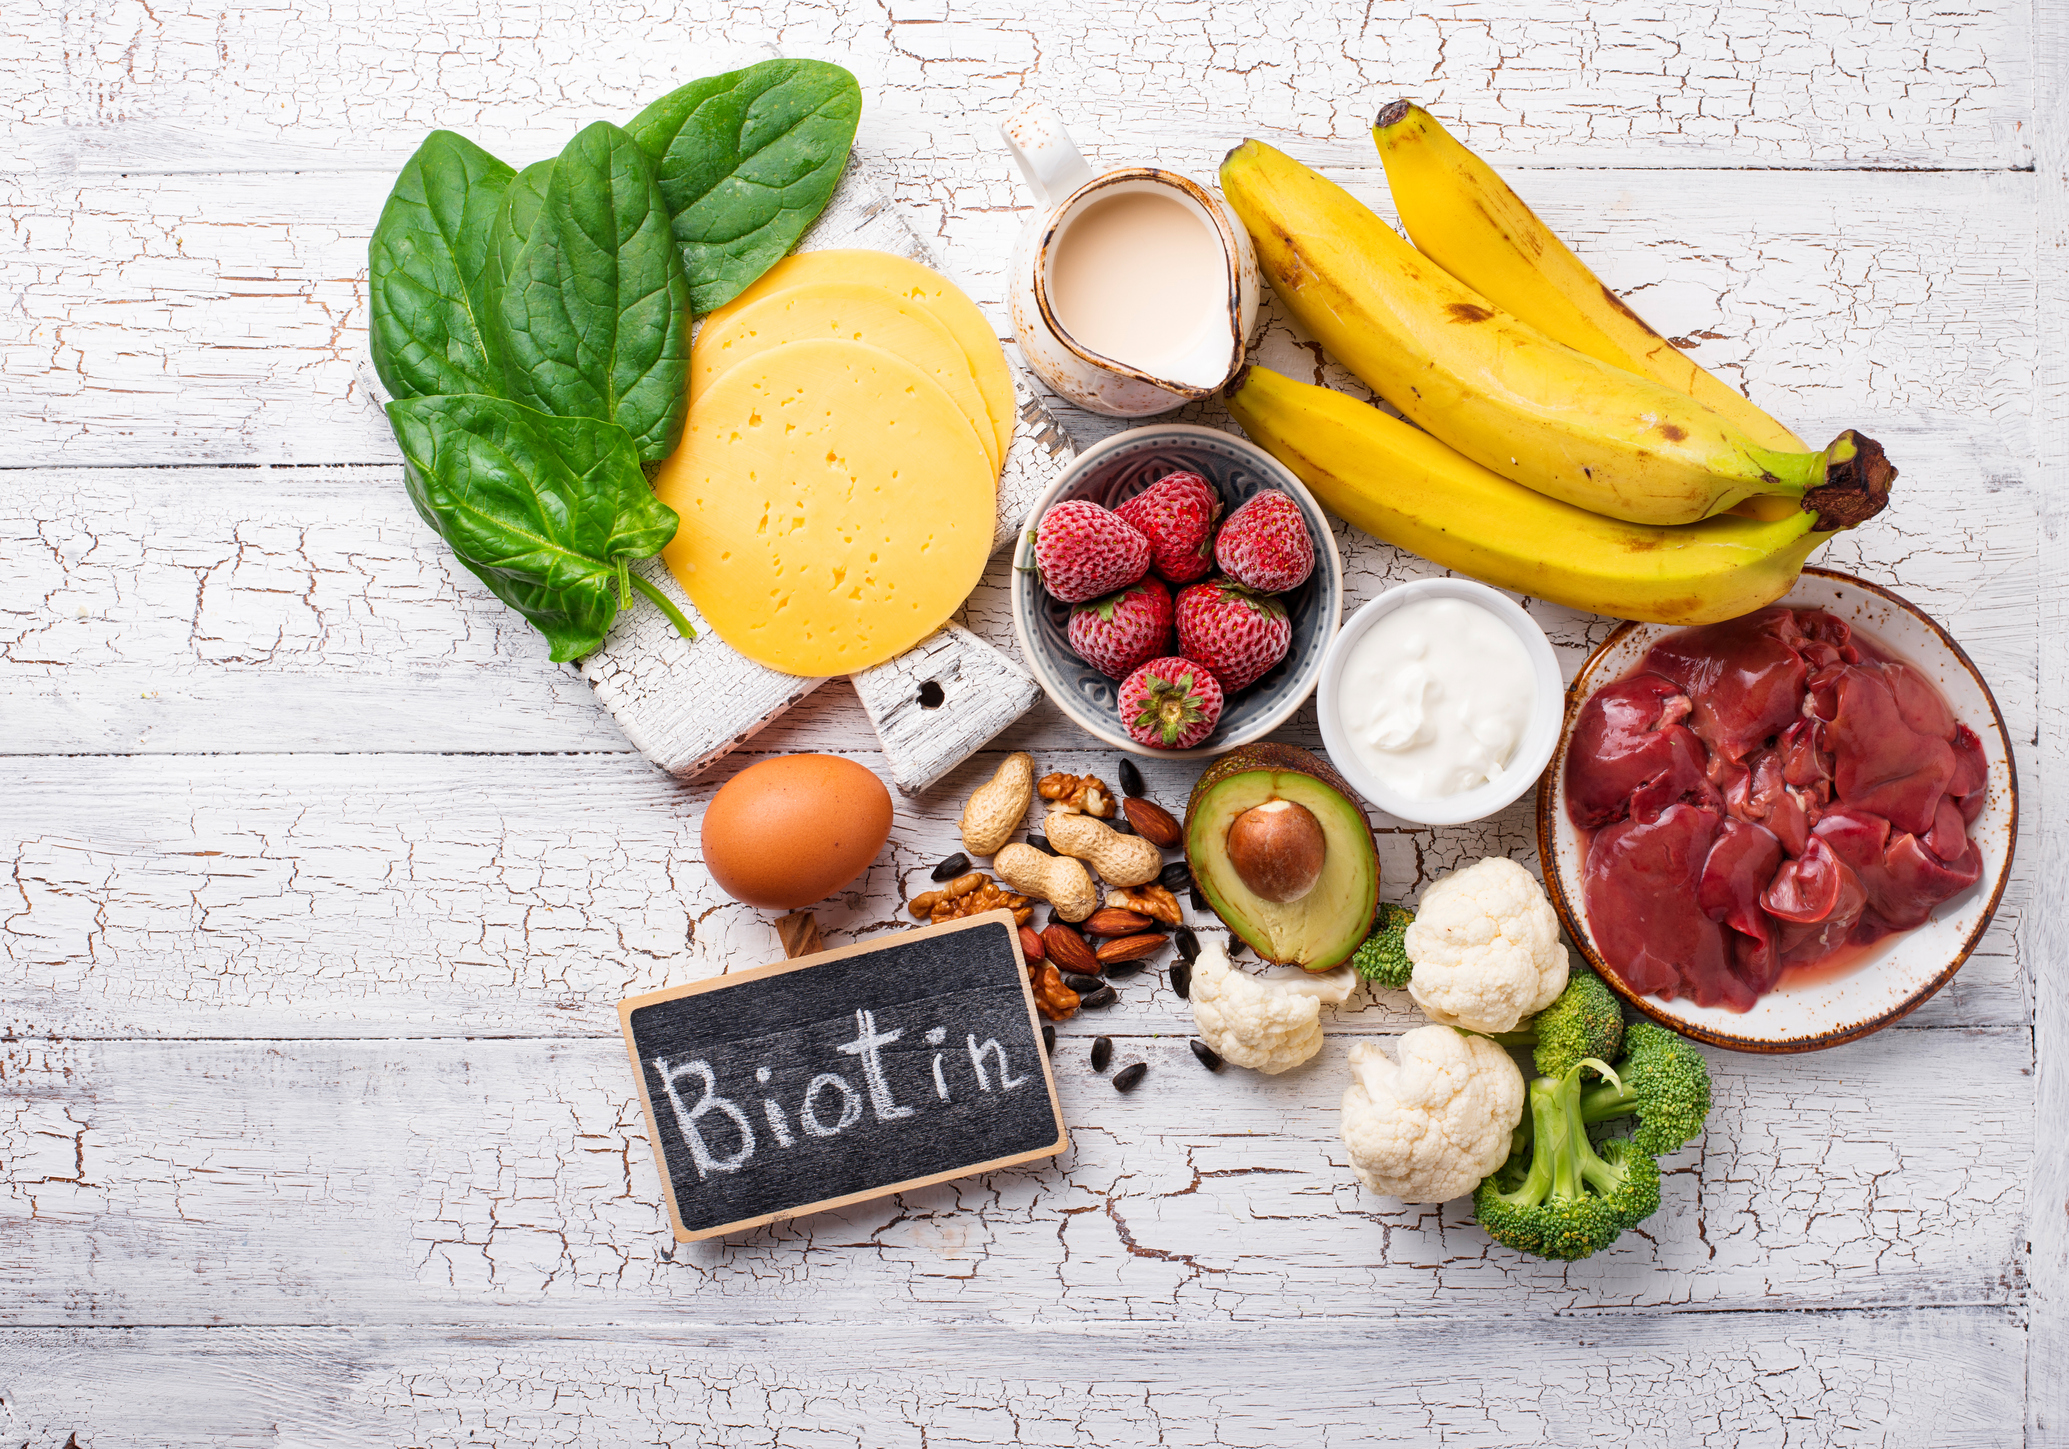 Foods that contain biotin